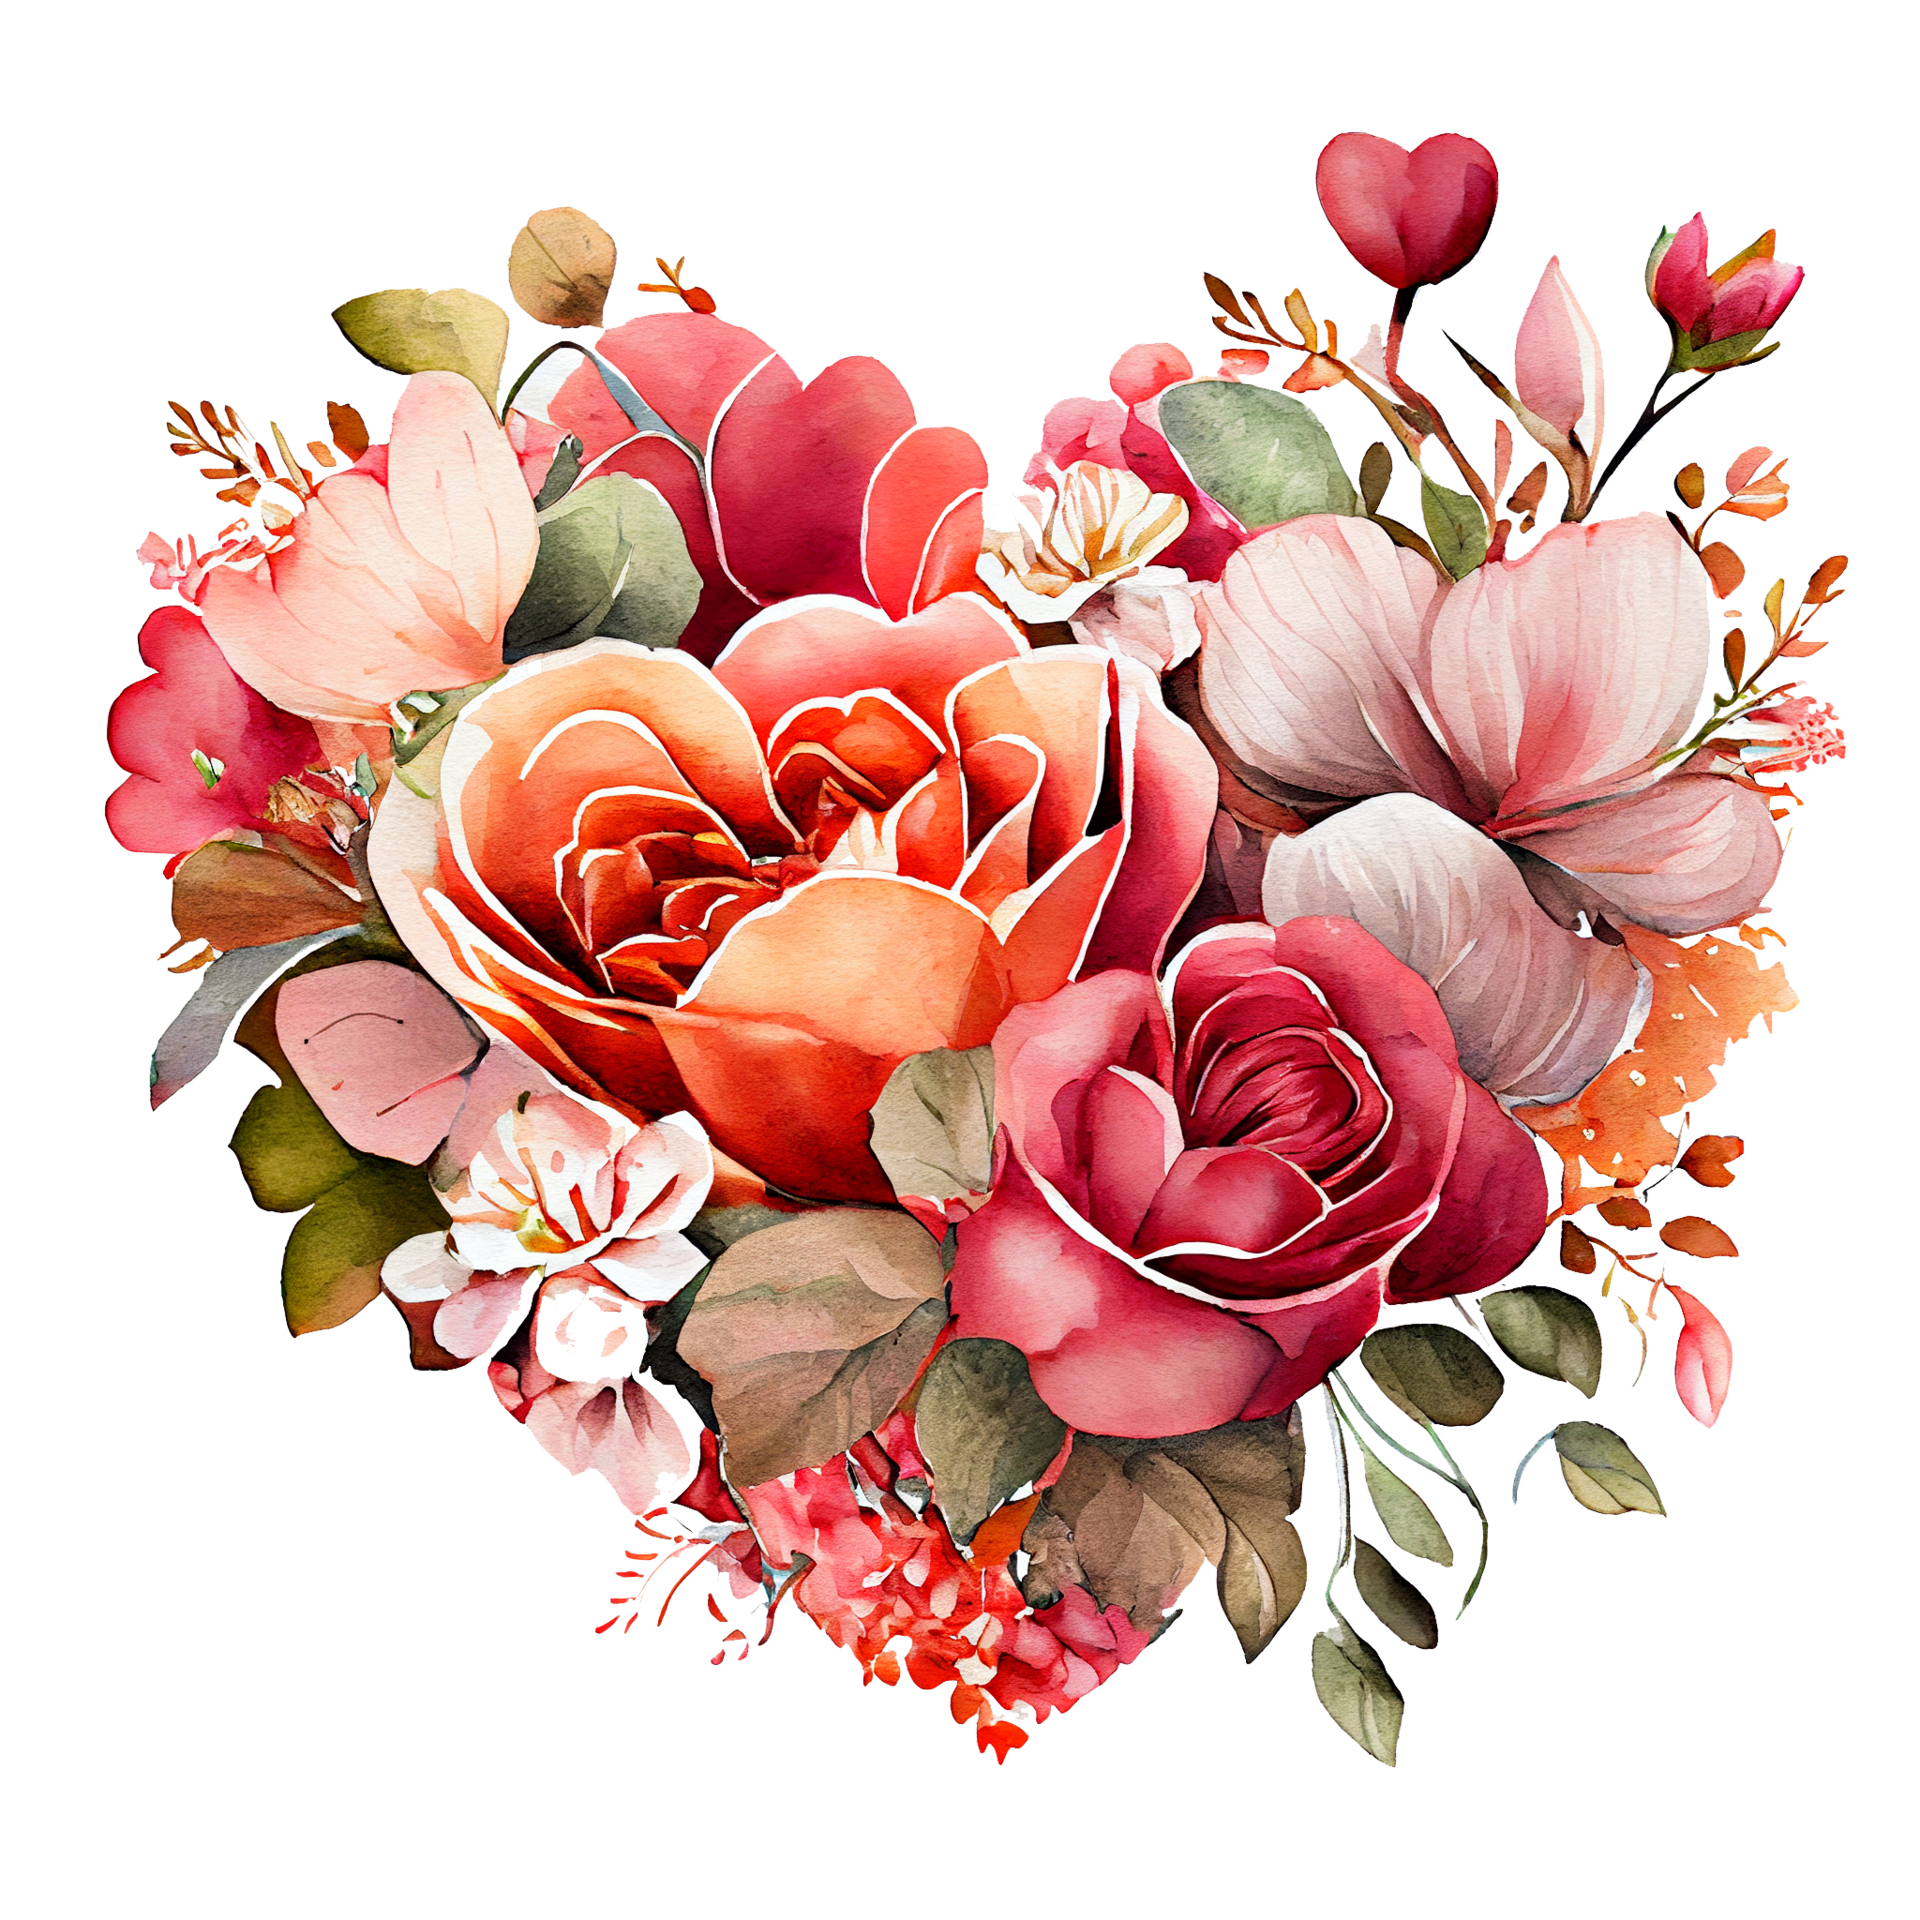 heart shaped rose bouquet, Romantic heart vignette made of vintage